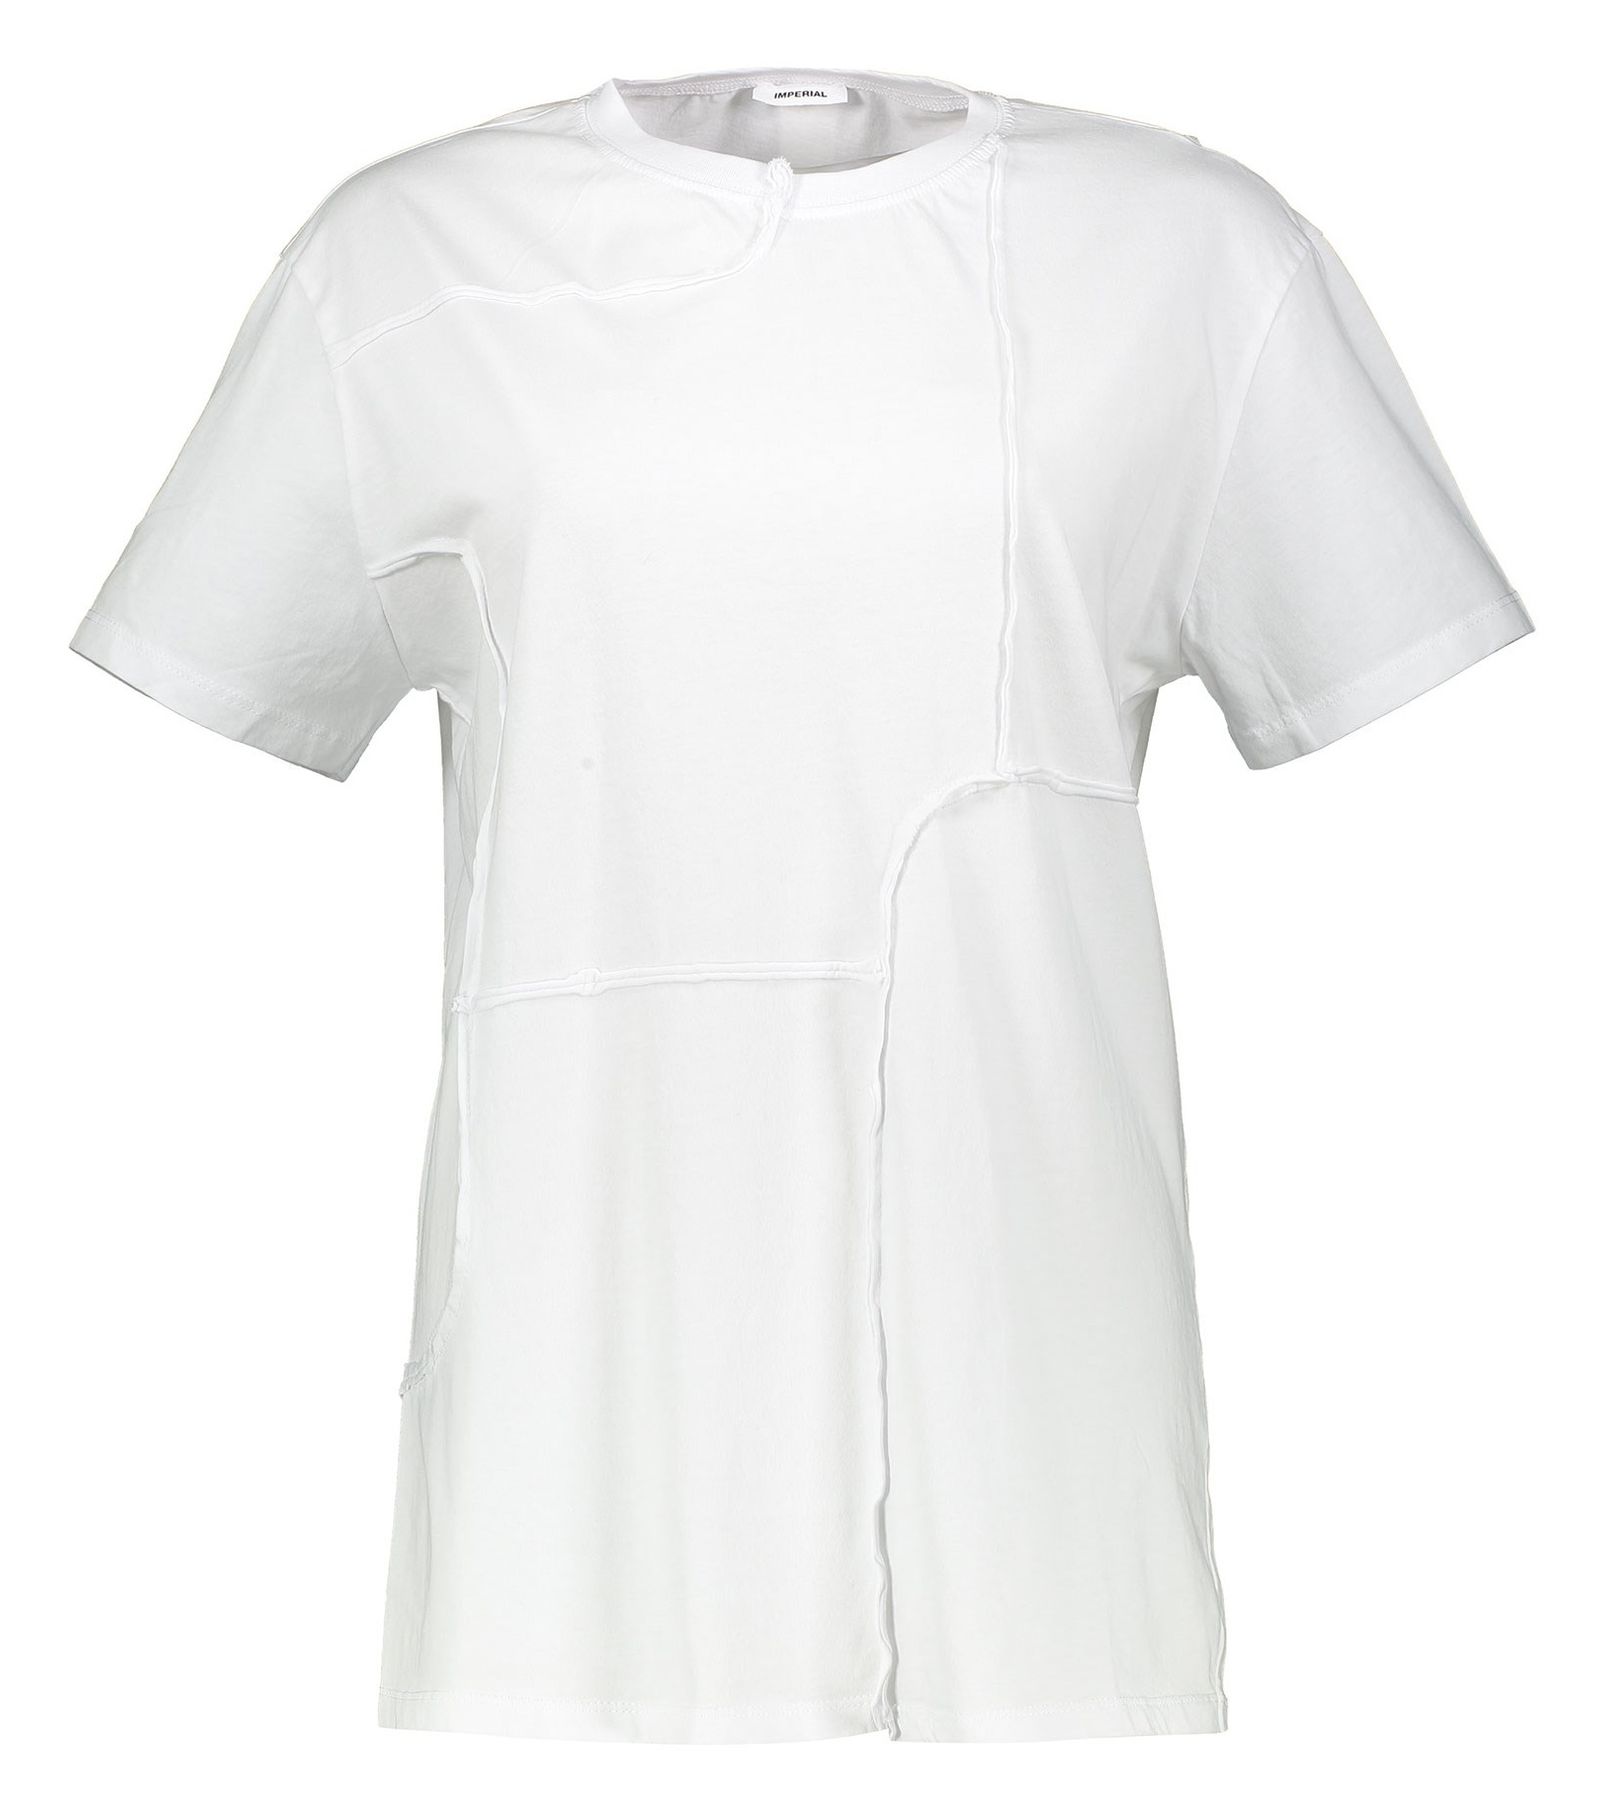 تی شرت نخی یقه گرد مردانه - امپریال - سفيد - 1